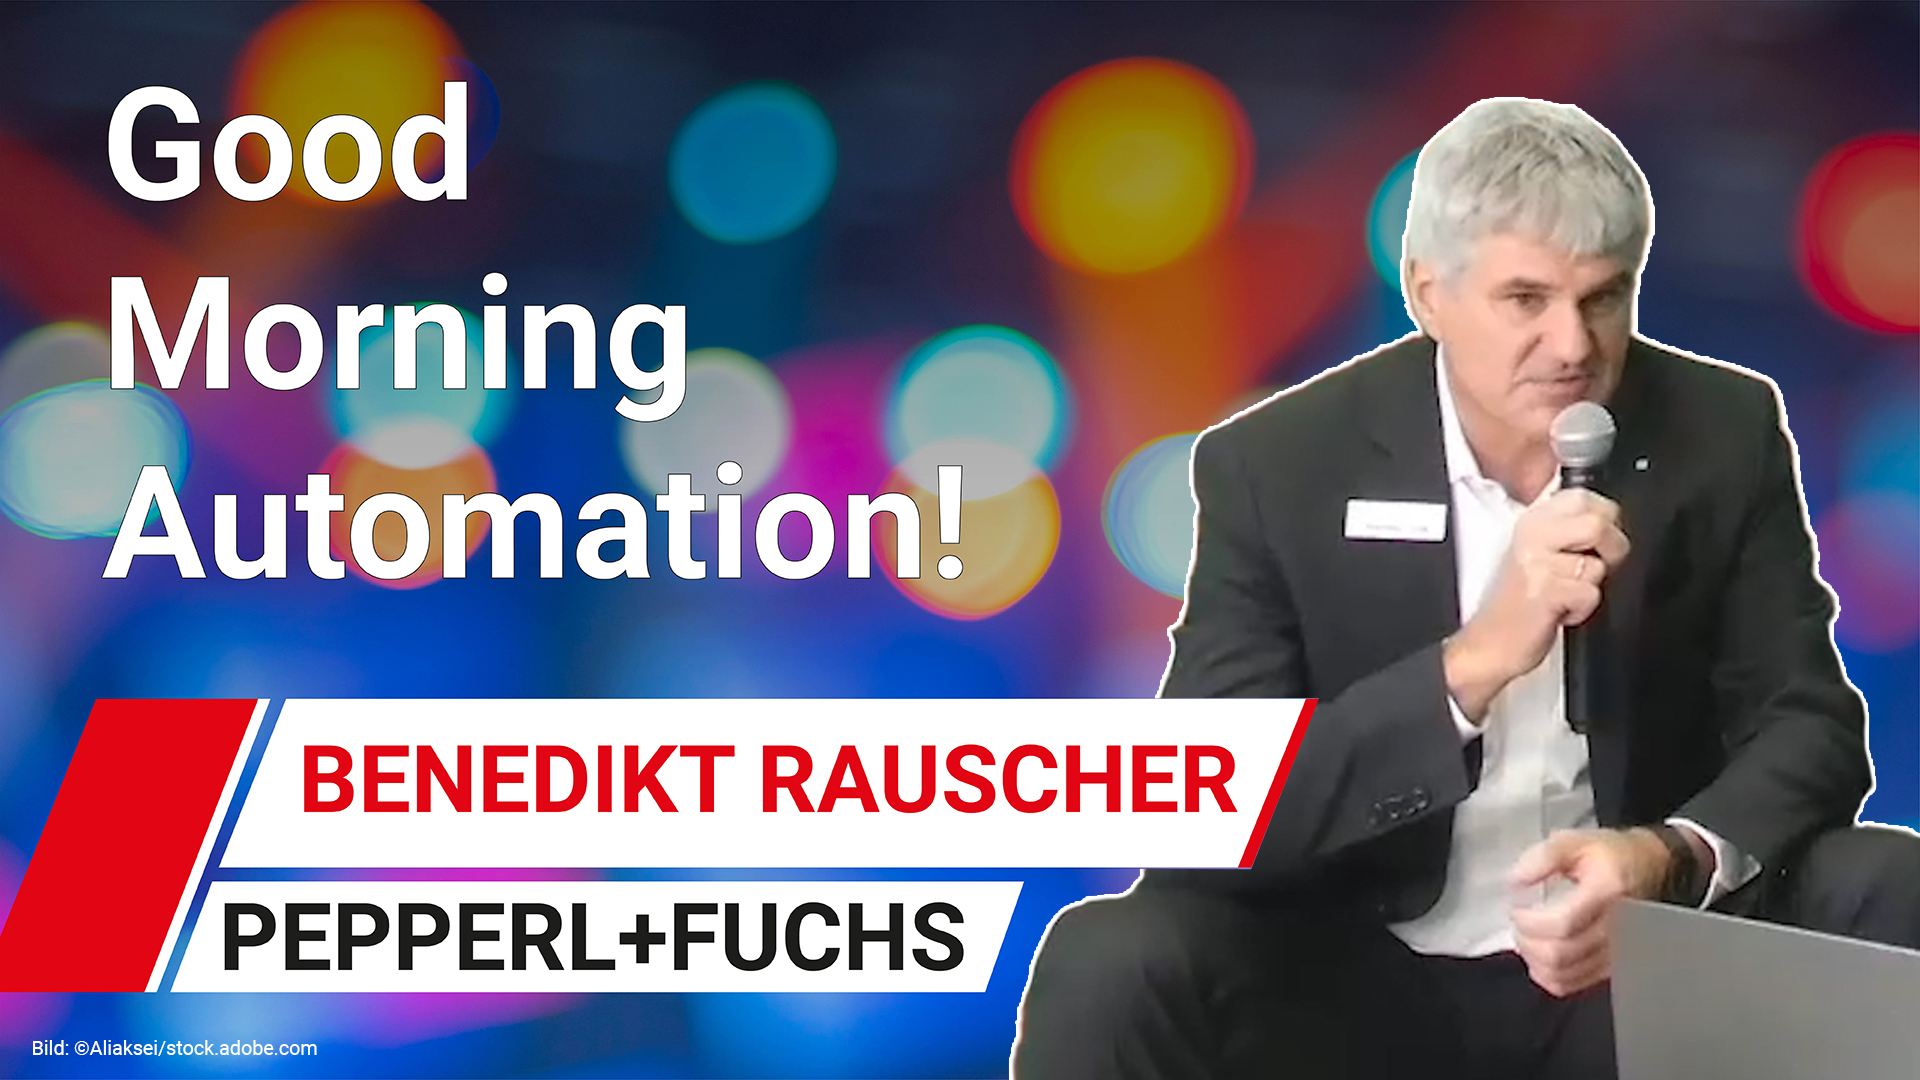 Benedikt Rauscher, Leiter globale Industrie 4.0 / IoT-Projekte bei Pepperl+Fuchs